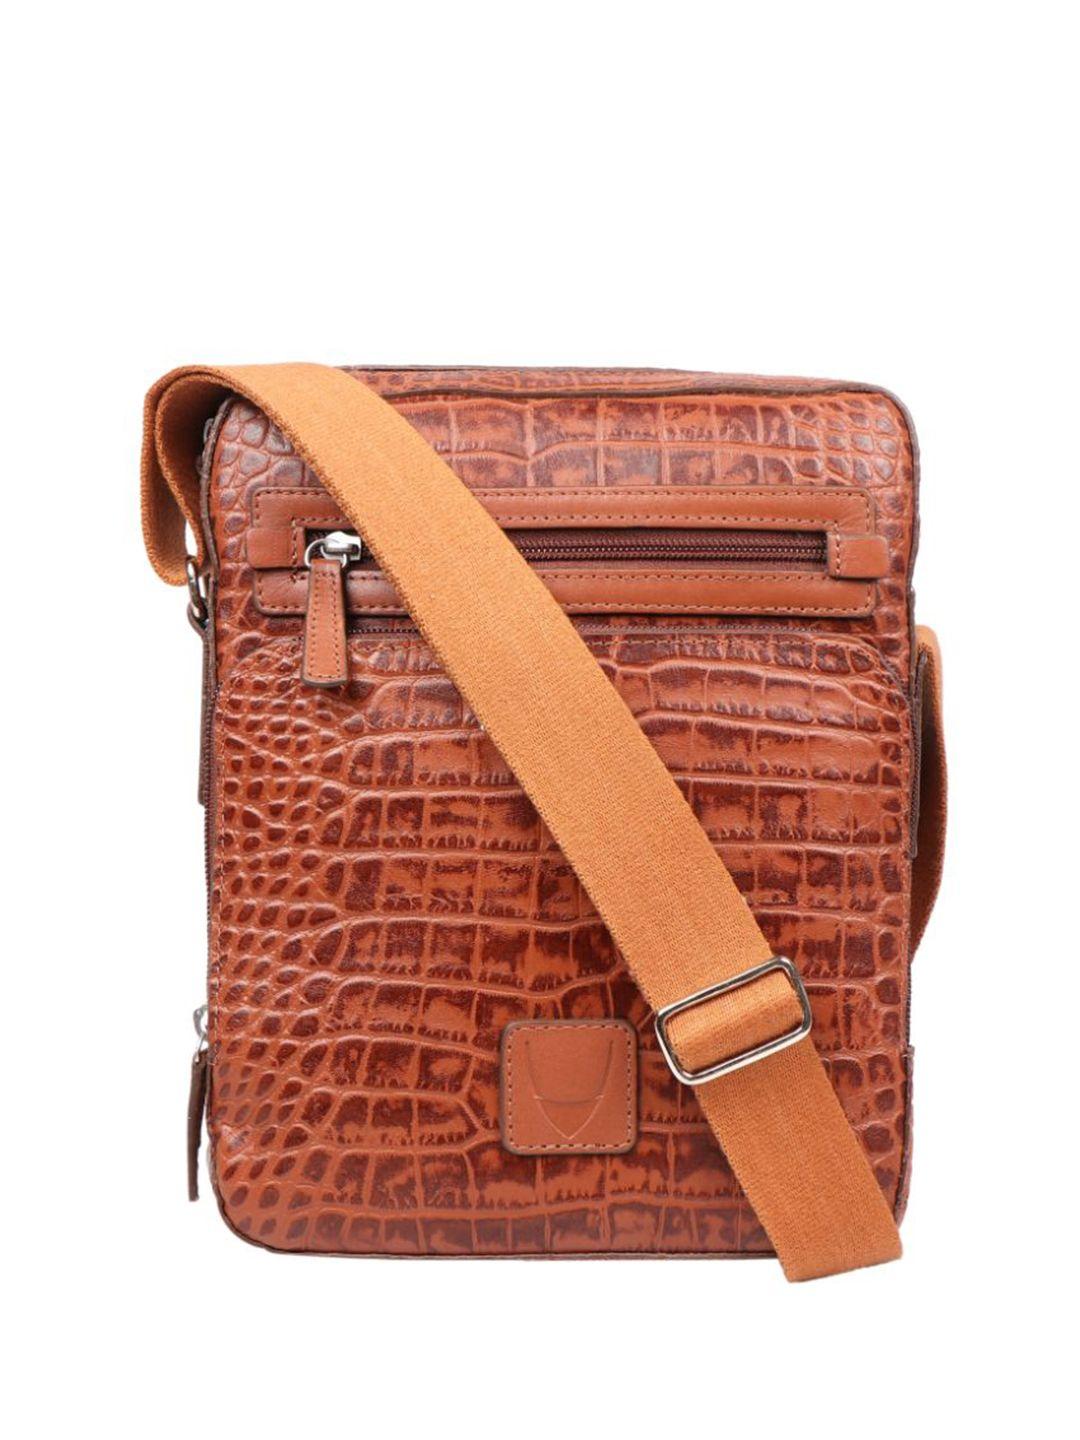 hidesign textured leather messenger bag